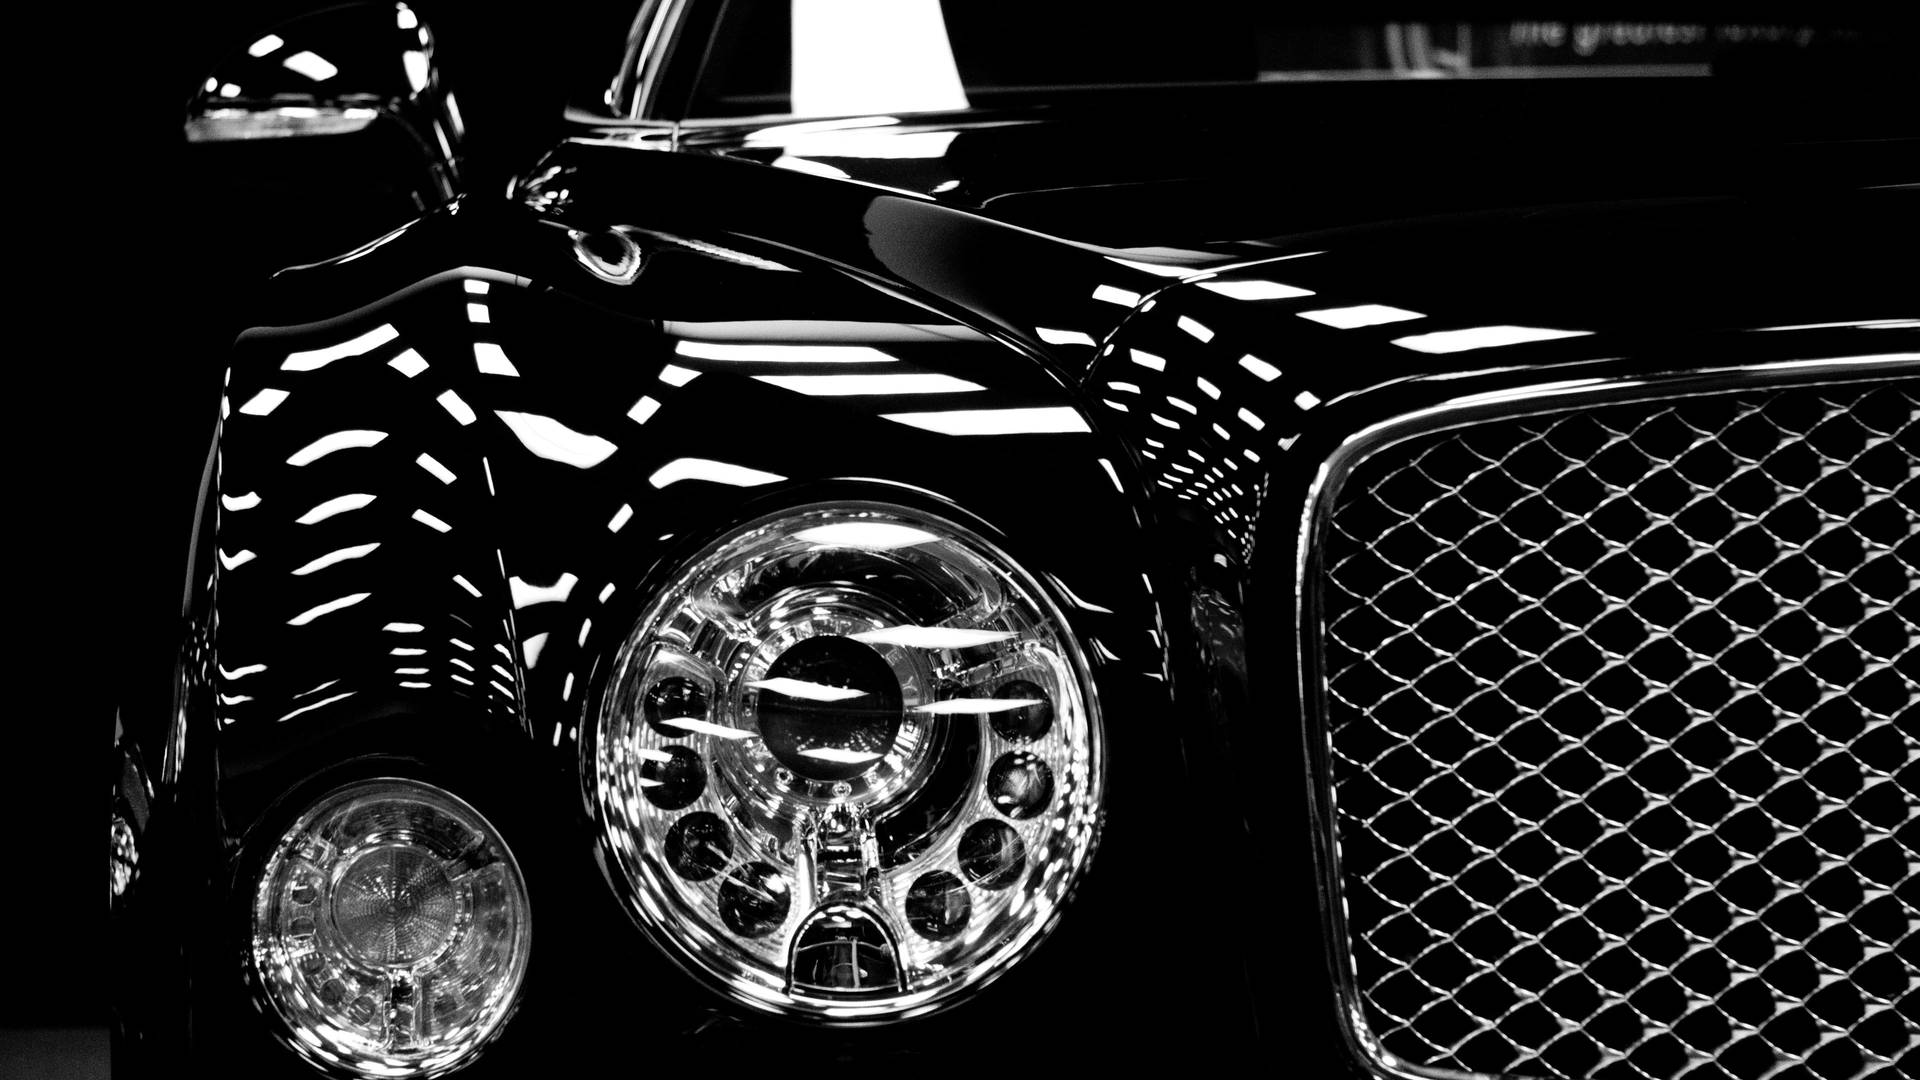 Bentley Mulsanne Headlights Wallpaper